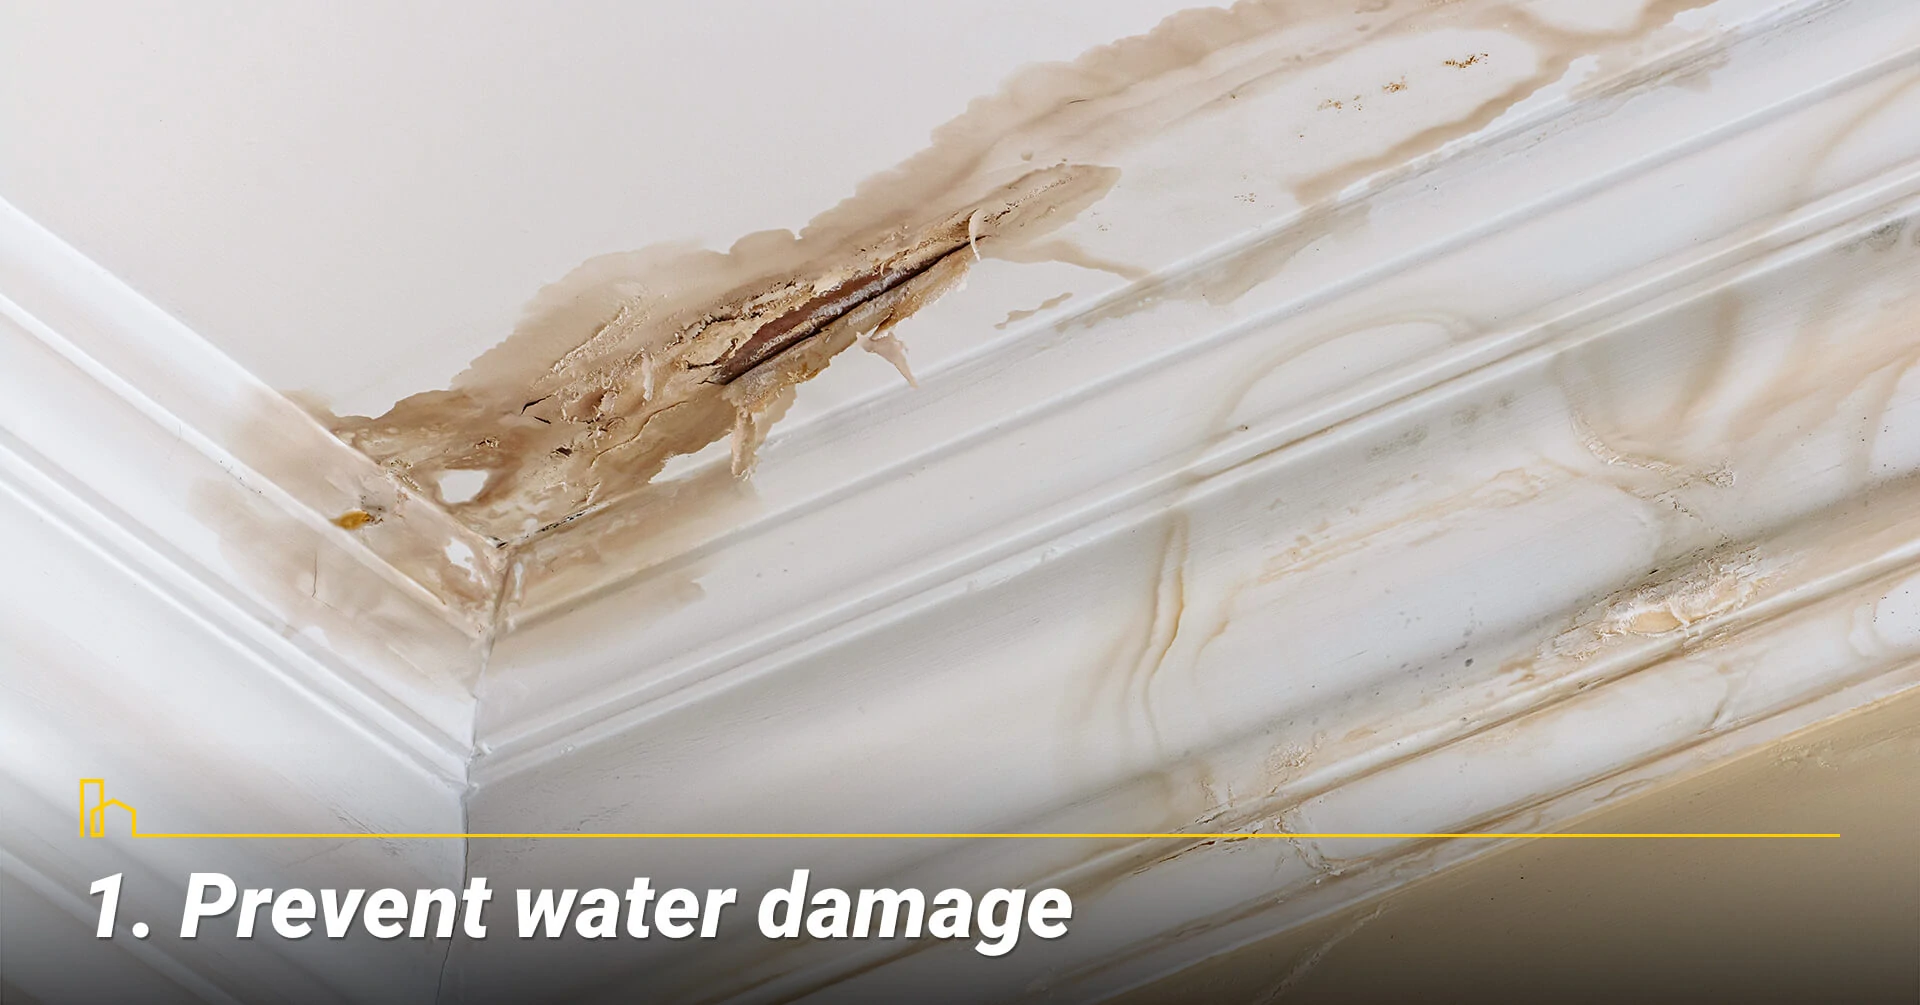 Prevent water damage, avoid interior water damage